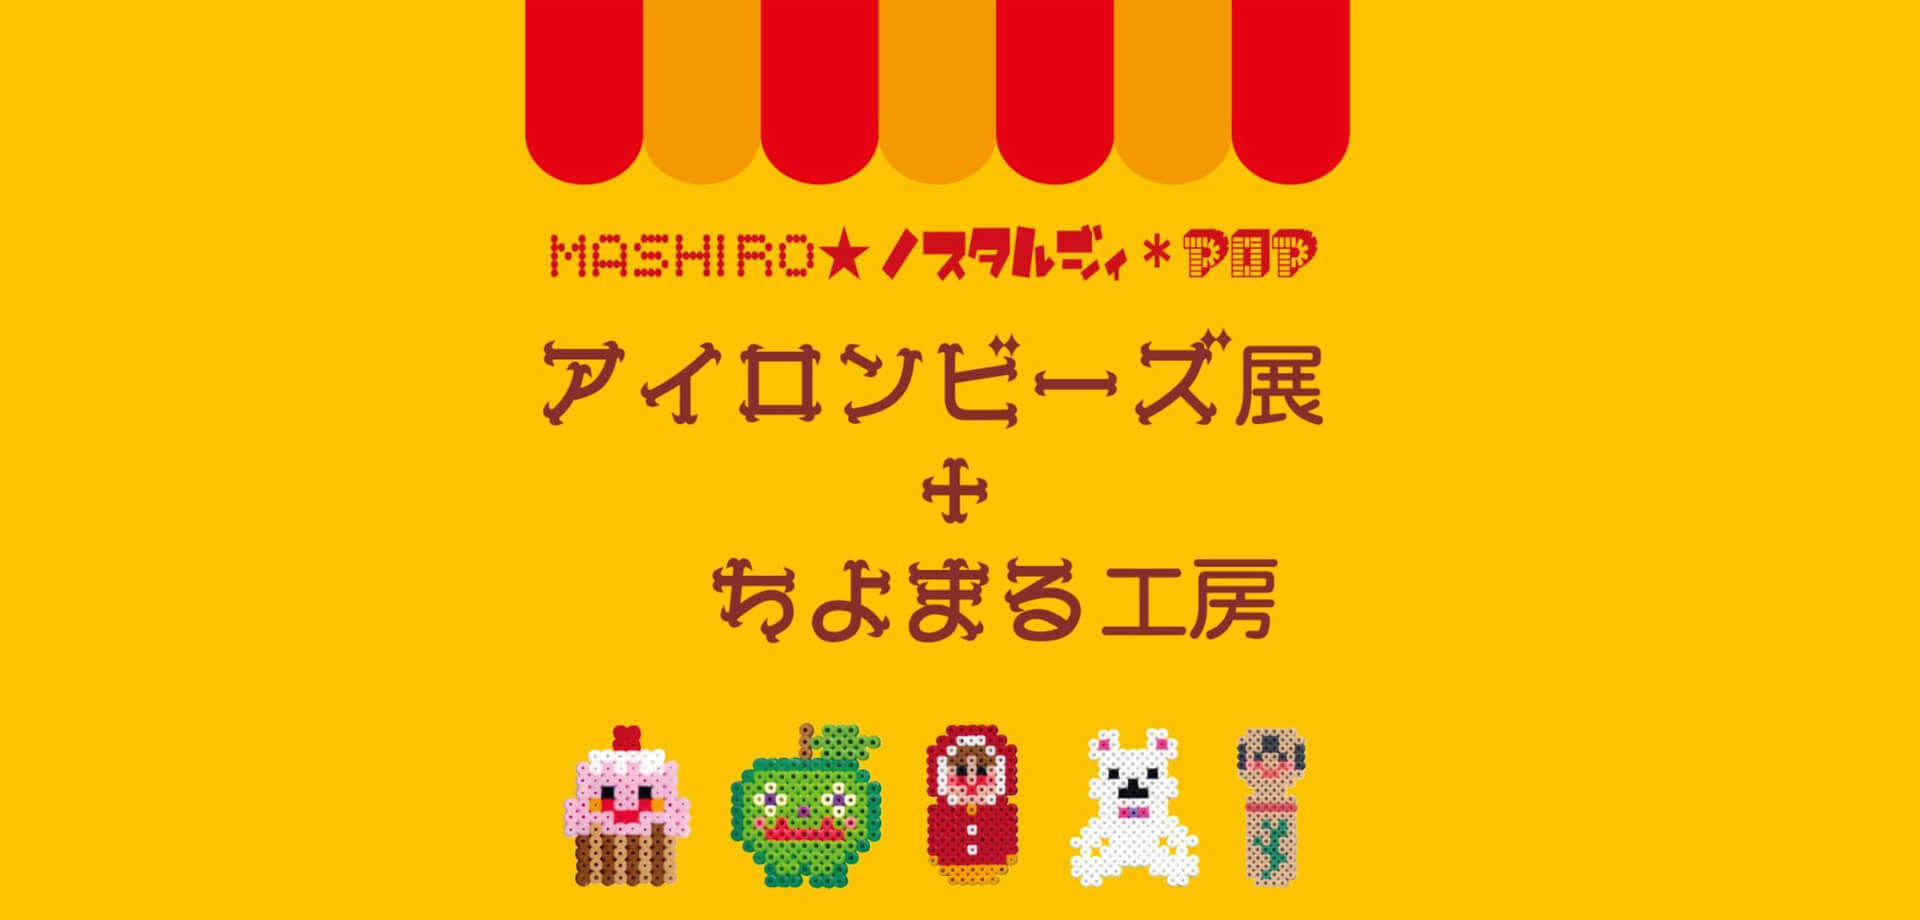 MASHIRO「ノスタルジィ＊POPアイロンビーズ展」東京タワー